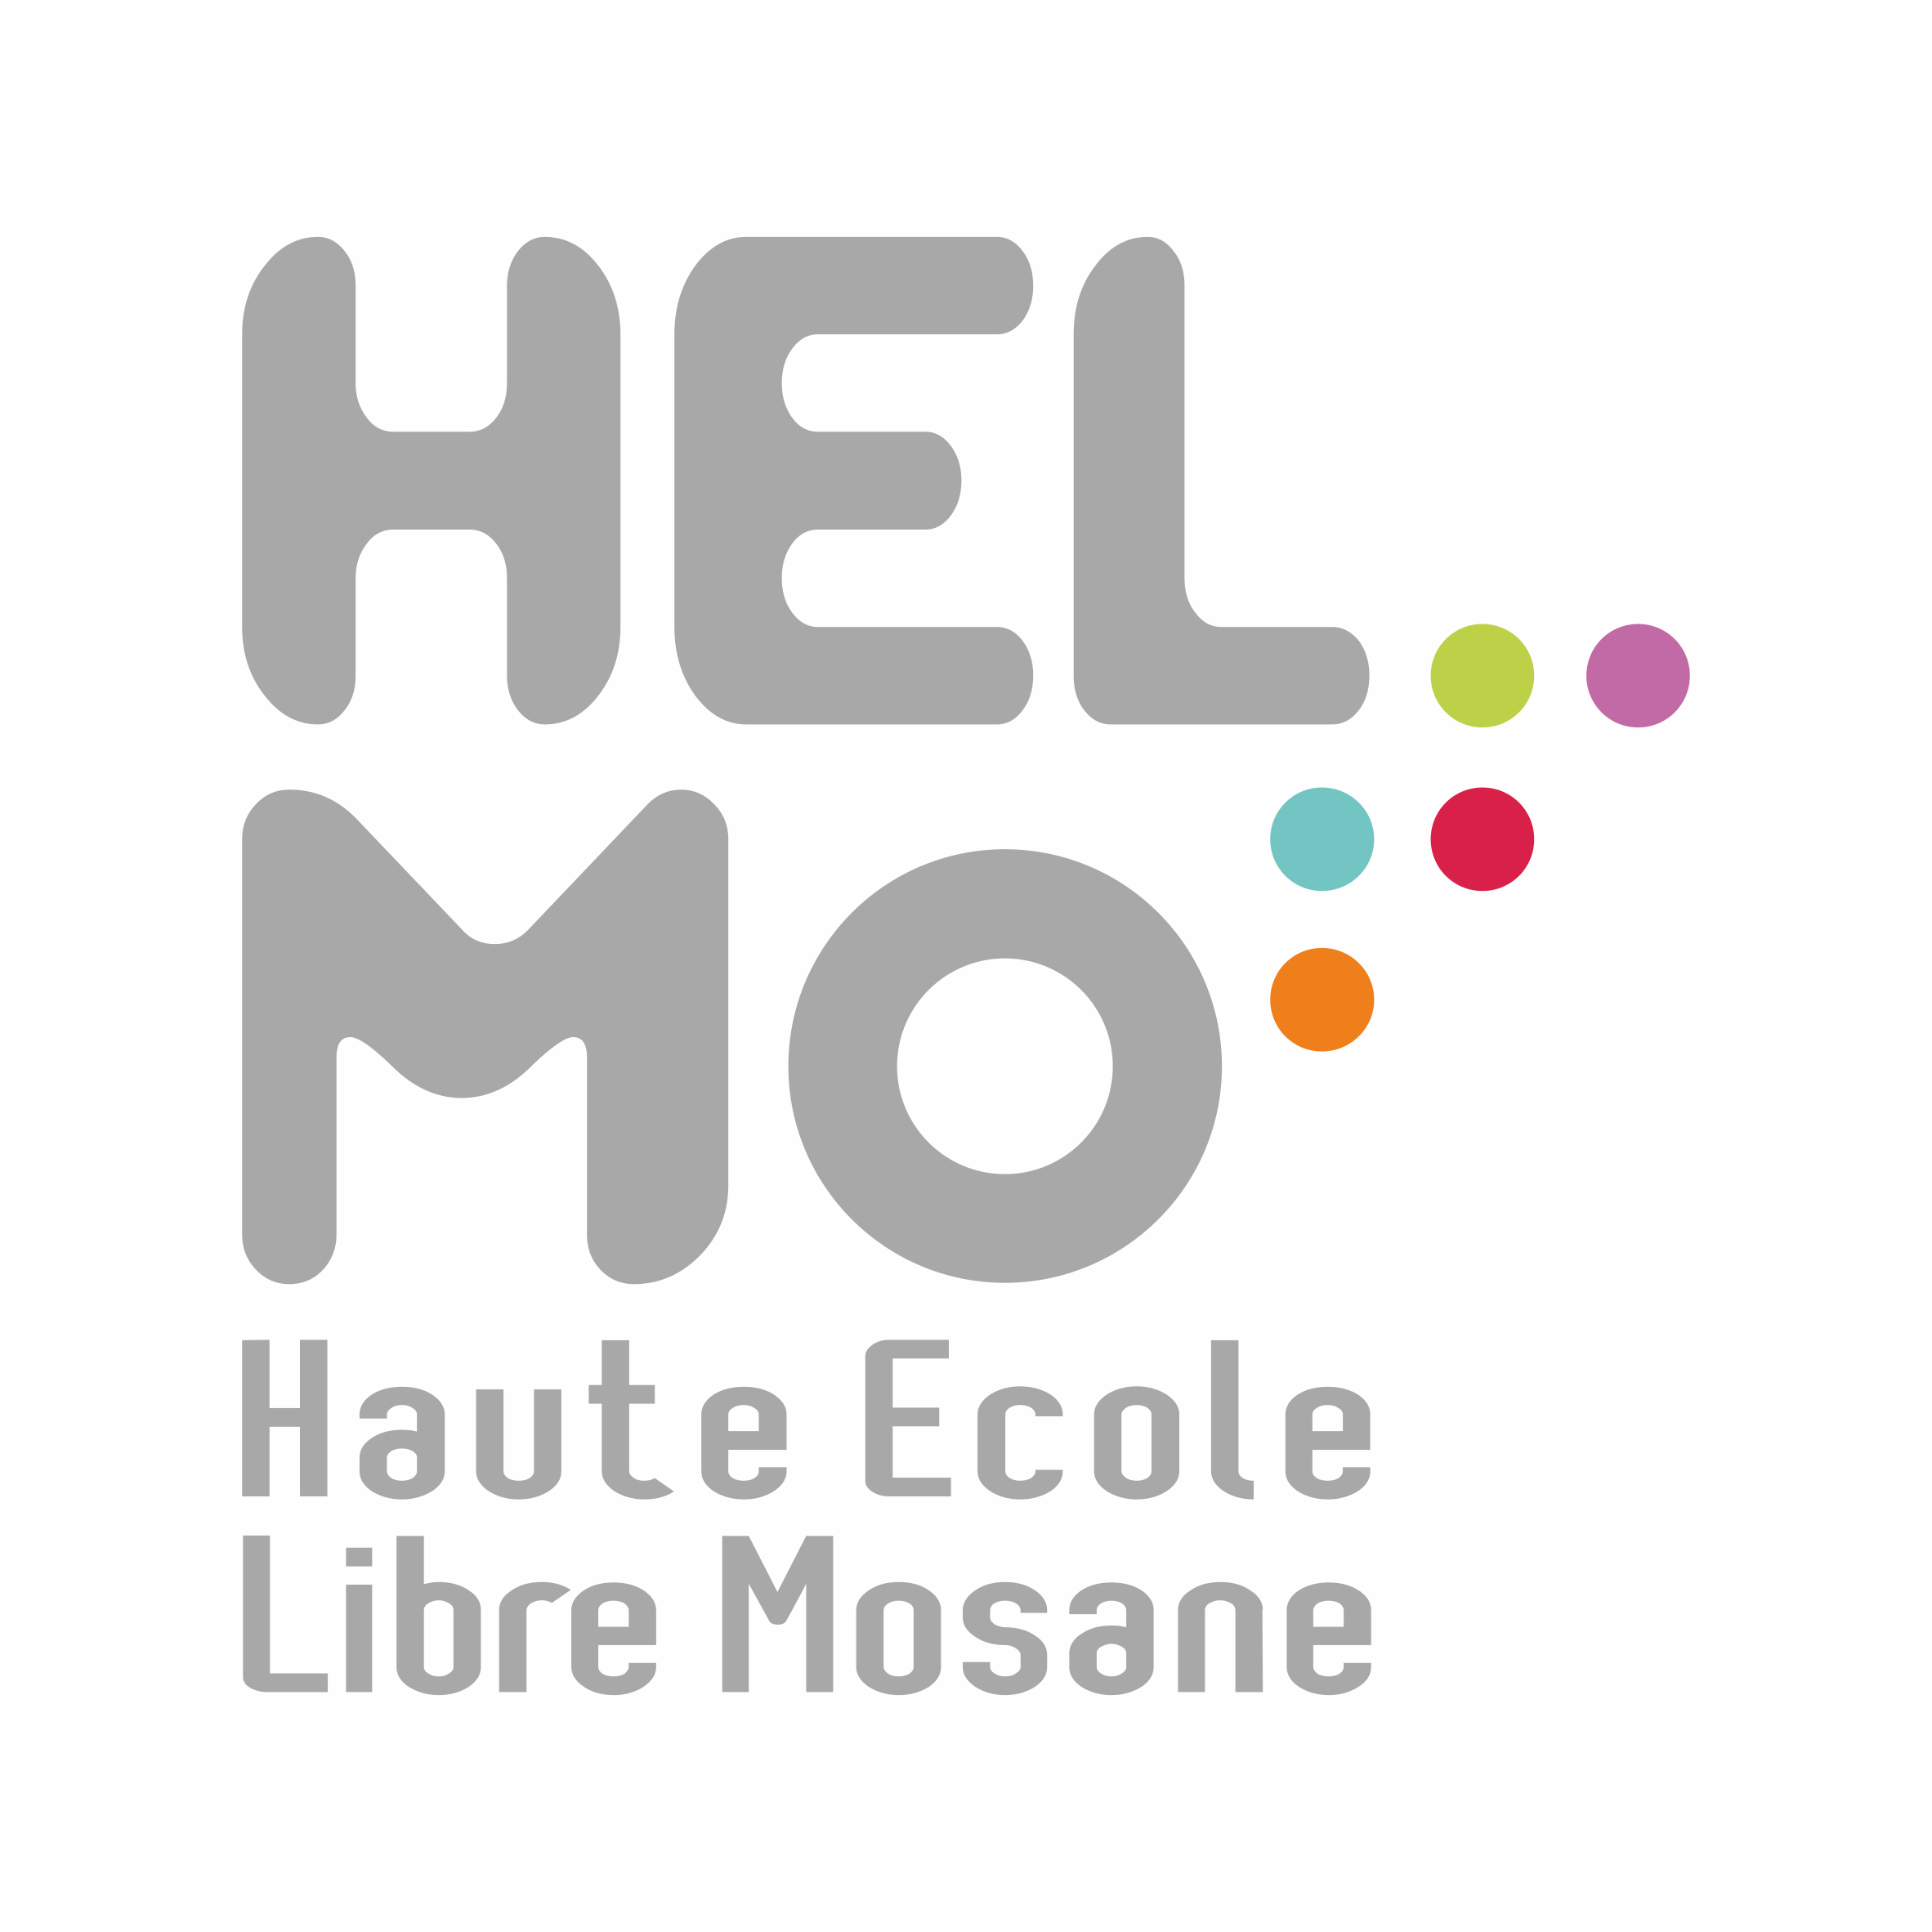 Haute Ecole HELMo (Liège) #52